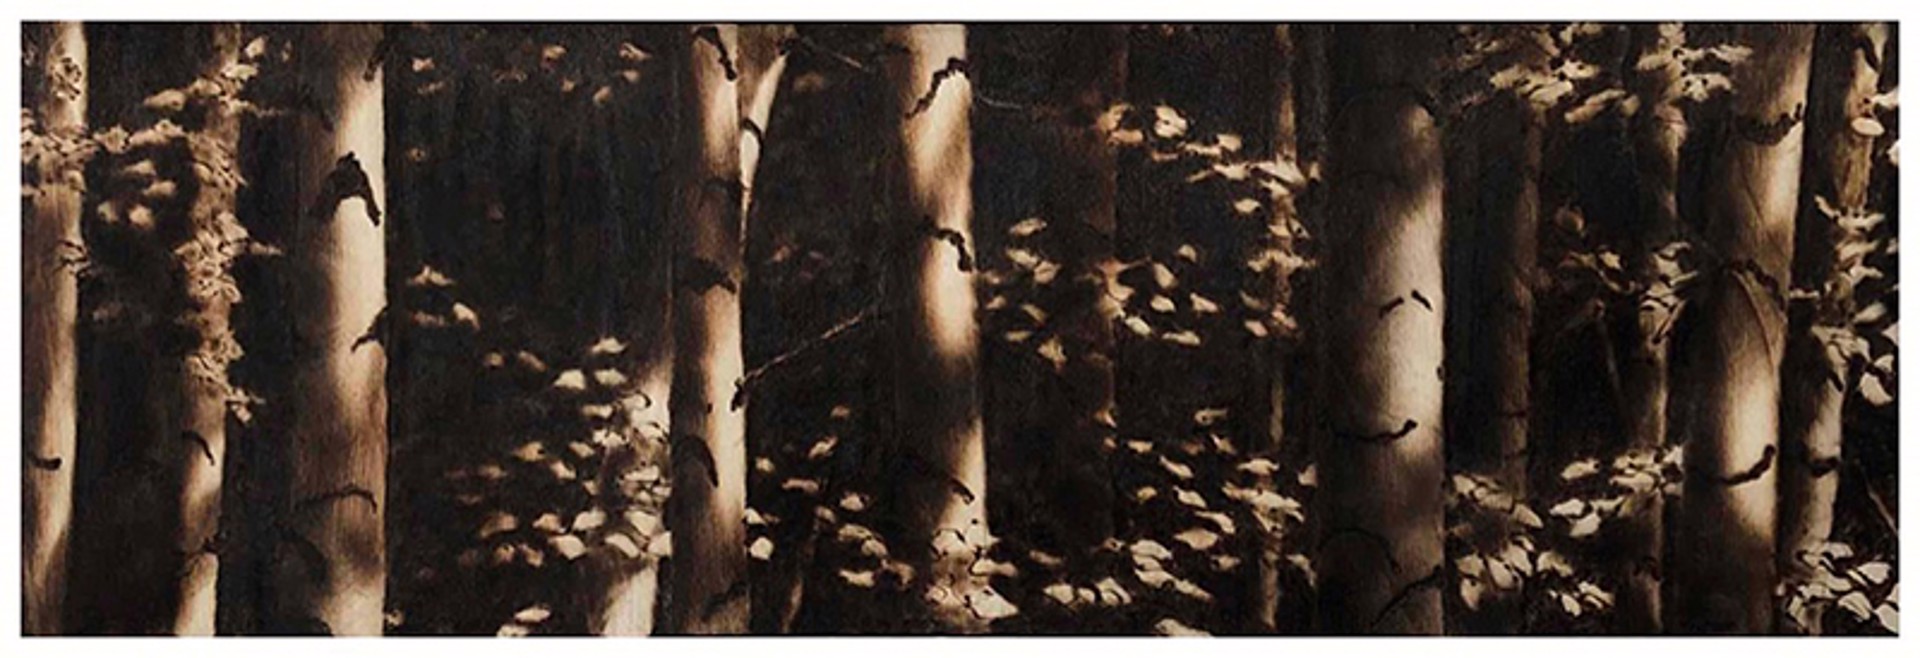 Amongst the Birches #2 by Paul Chojnowski